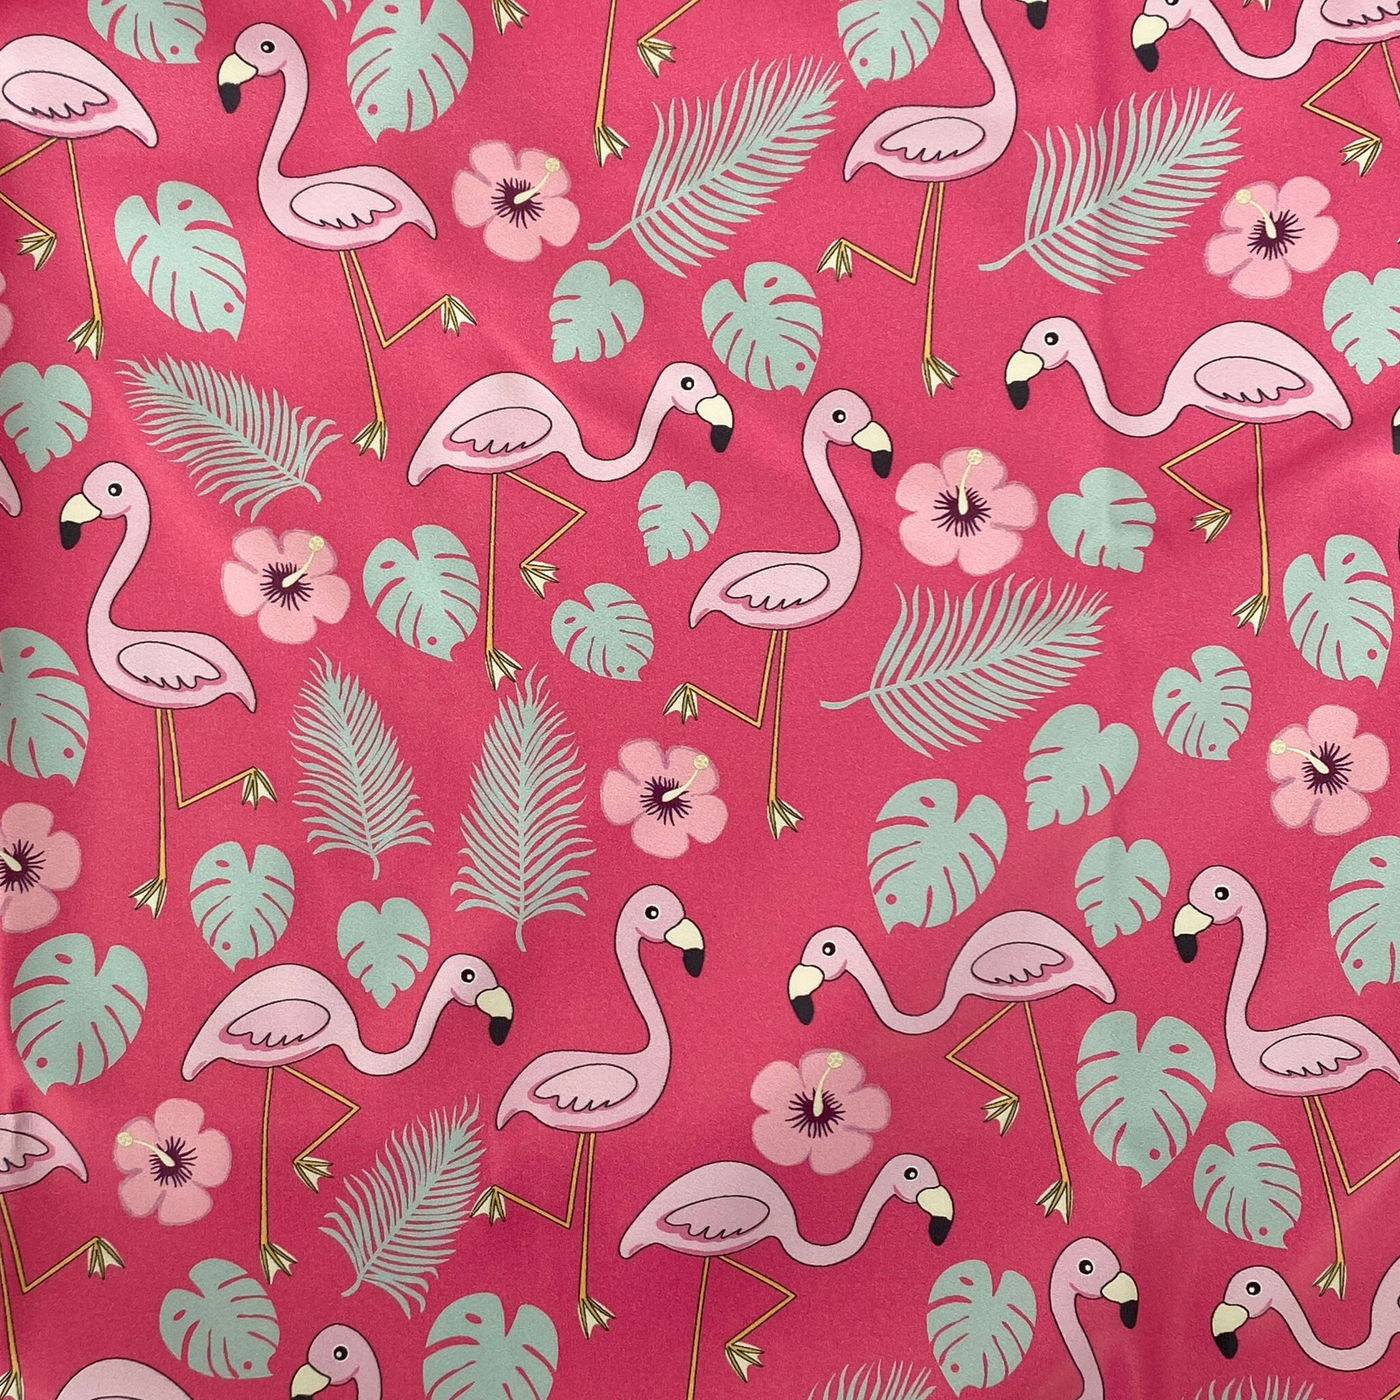 Waterproof Bib with Pocket: Flamingo Party